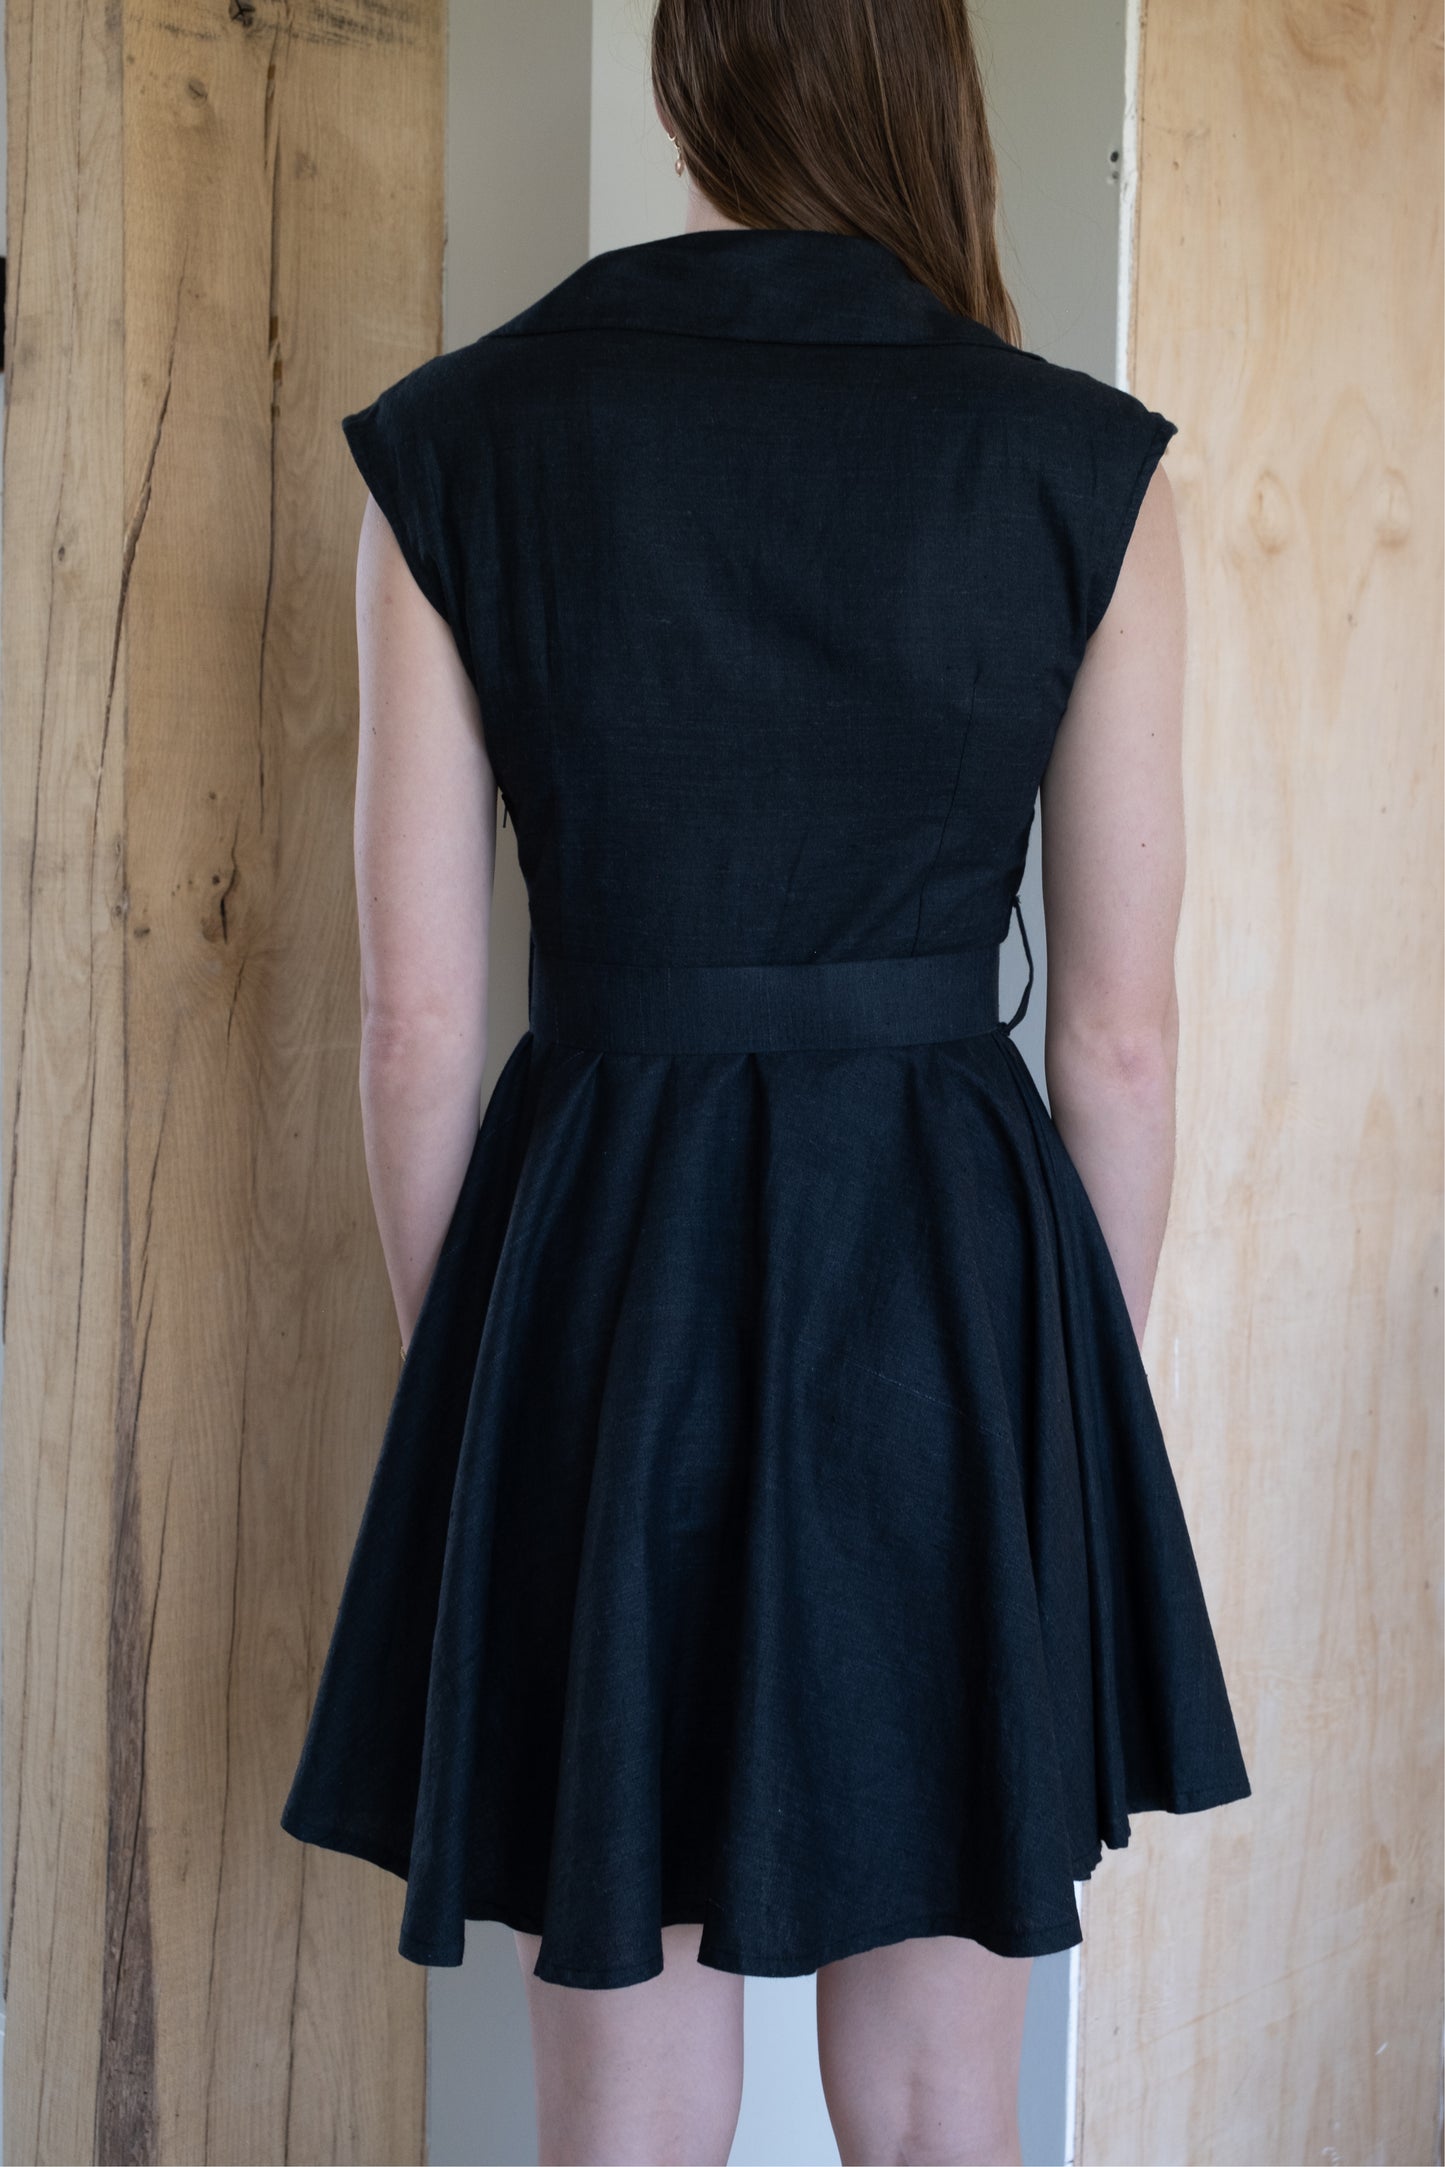 zwarte vintage jurk met aansluitende body en cirkel rok.